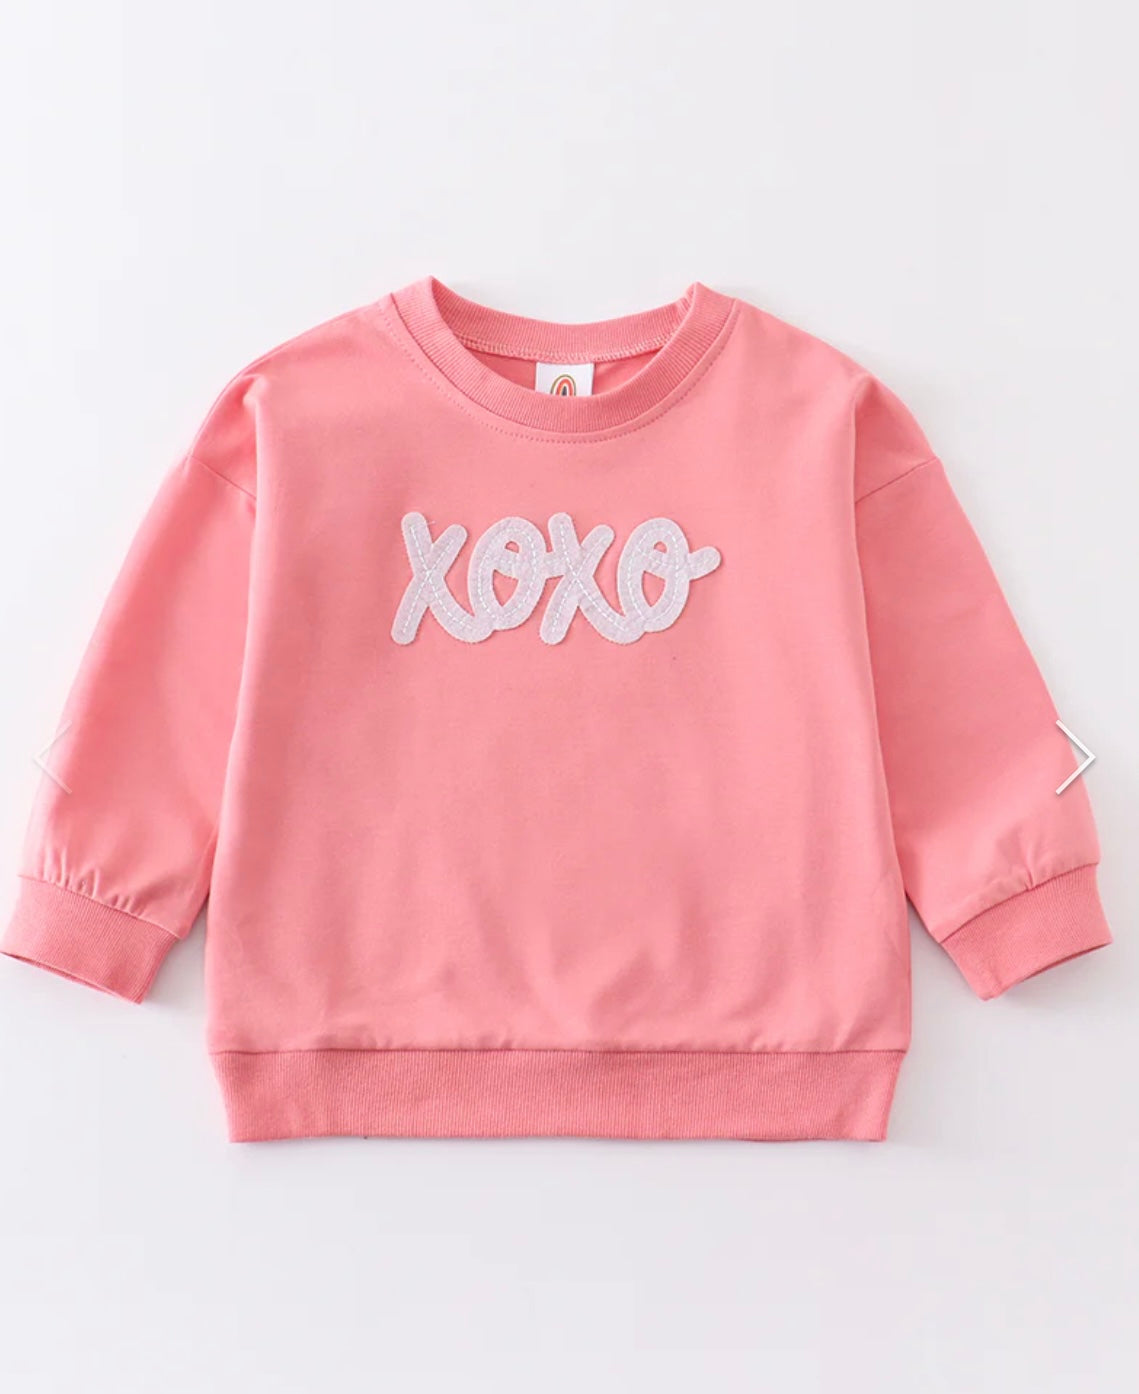 “Xoxo” pullover